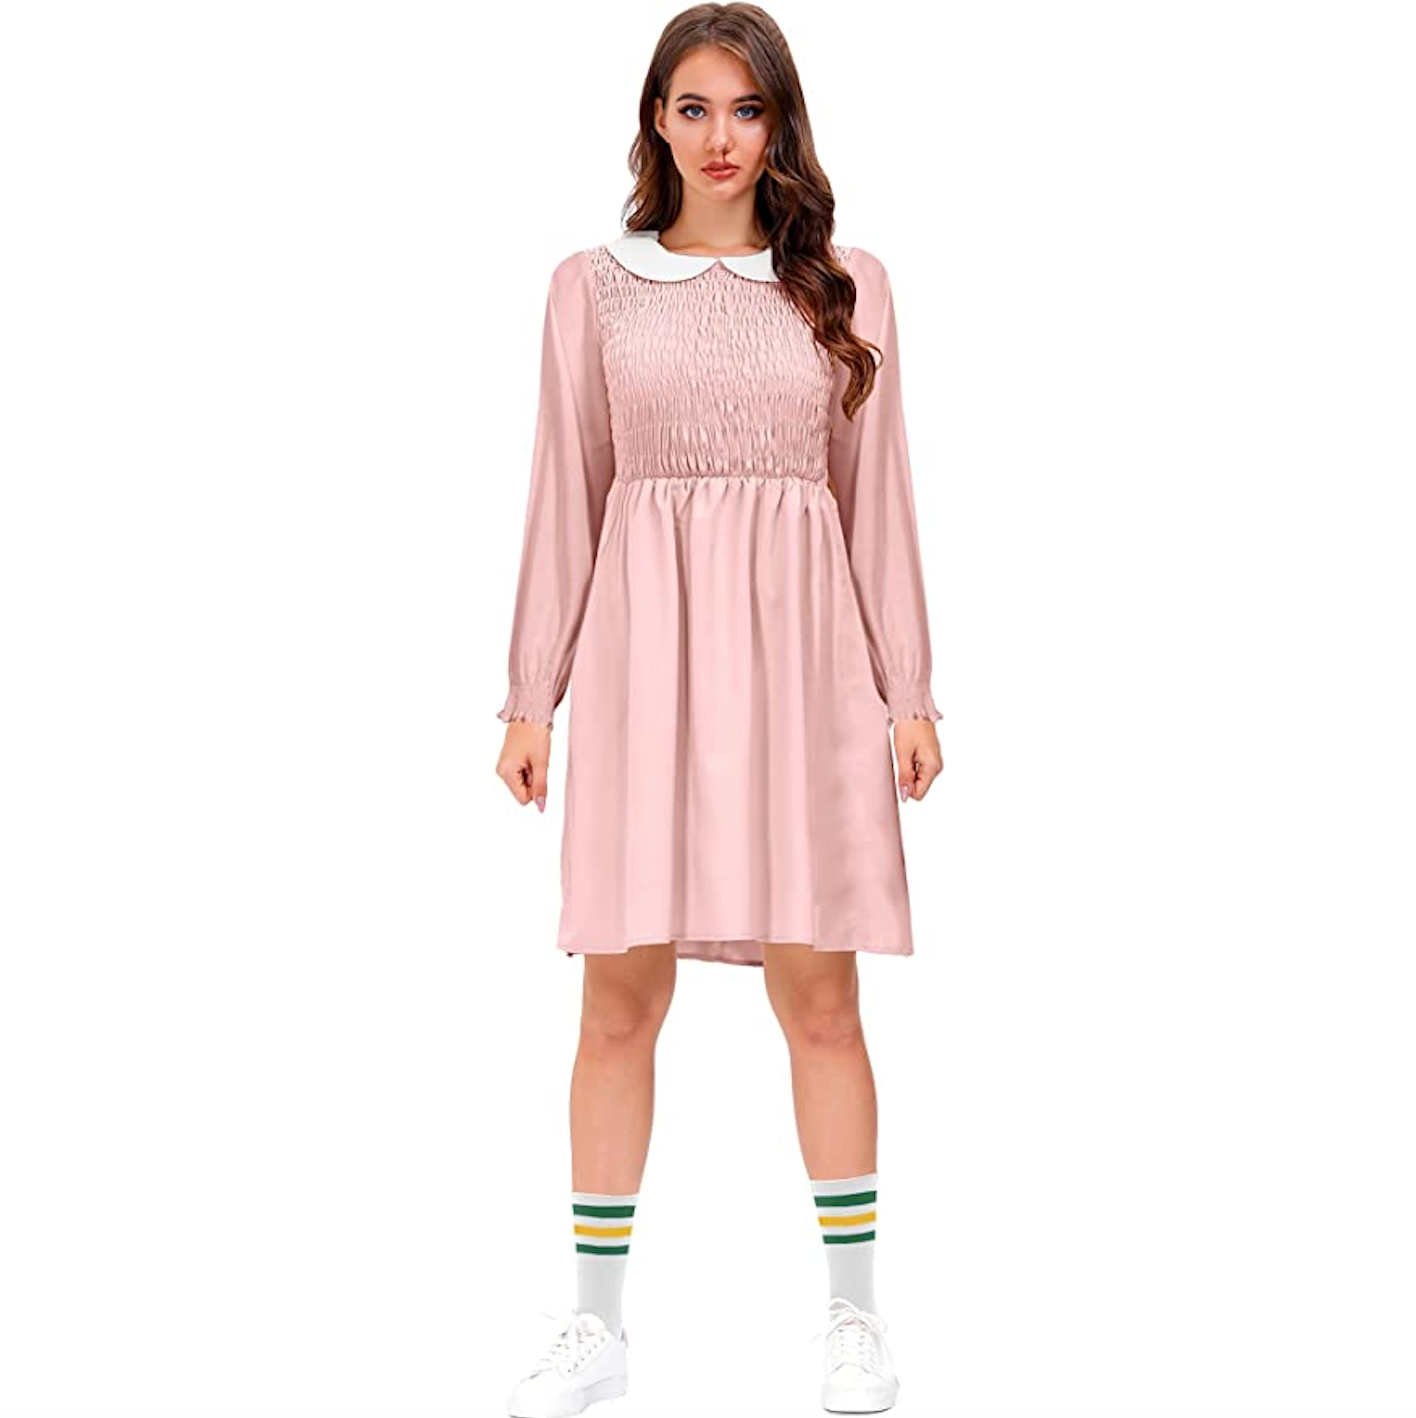 Clarisbelle Pink Costume Dress